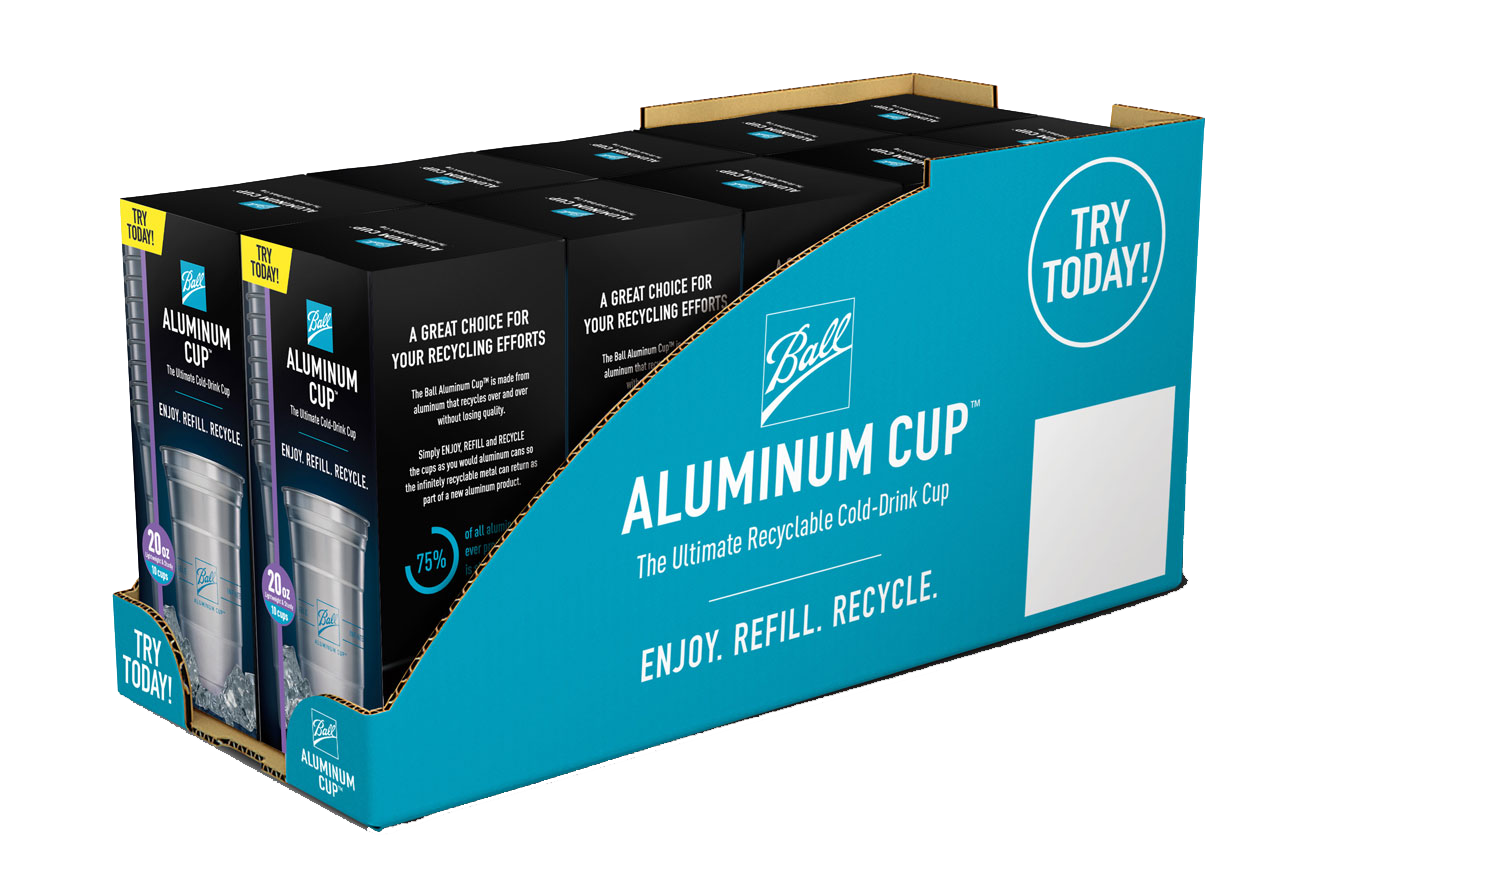 Retailer display of Aluminum Cups